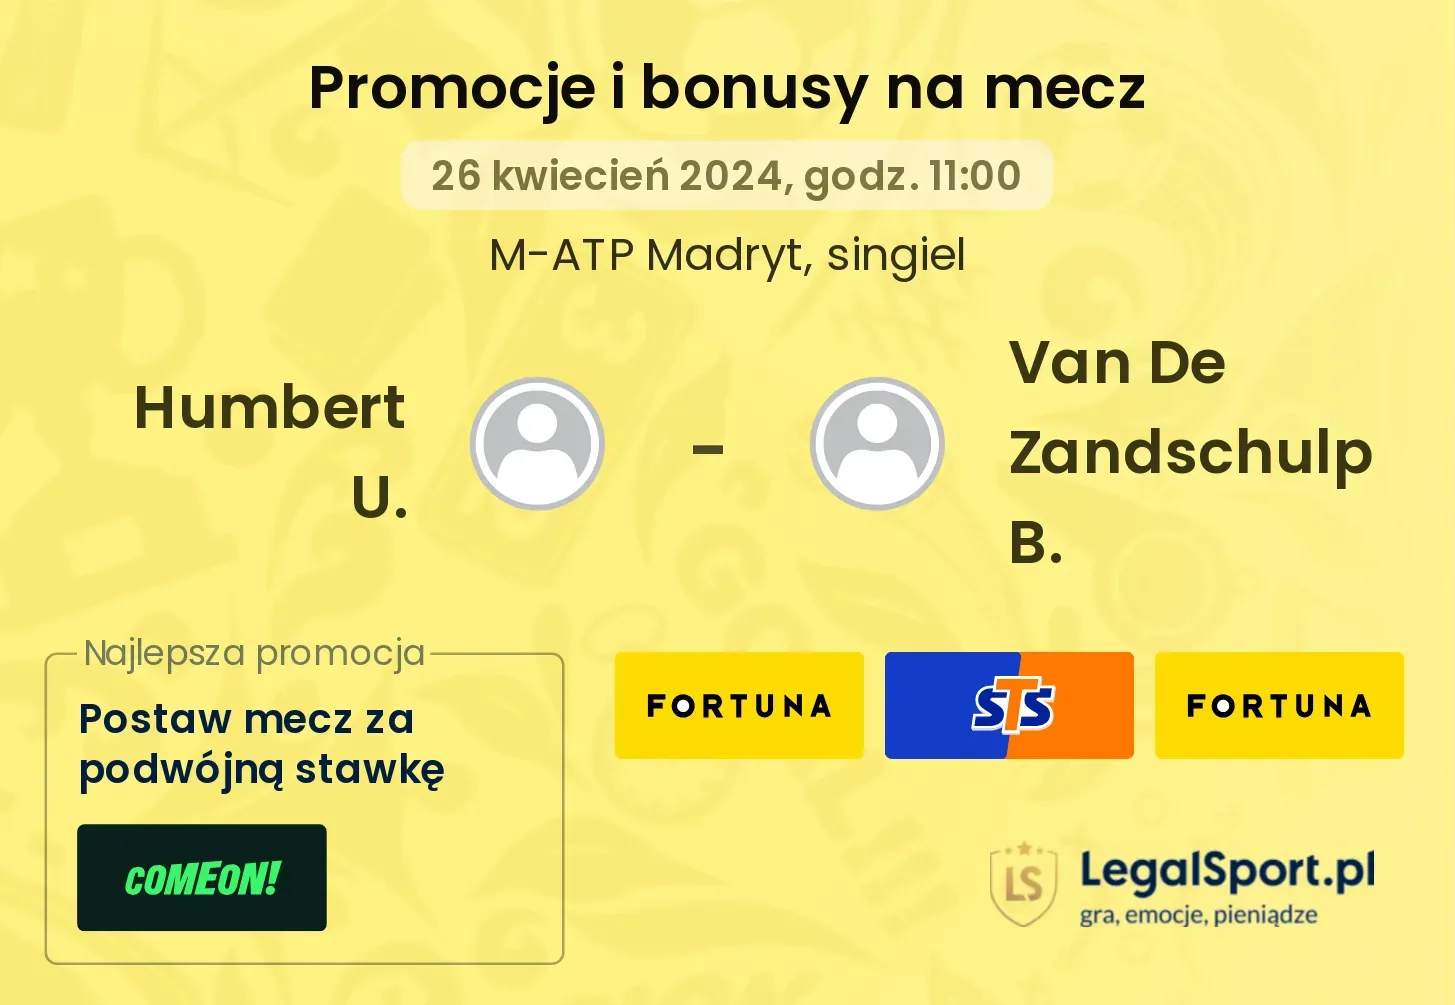 Humbert U. - Van De Zandschulp B. promocje bonusy na mecz